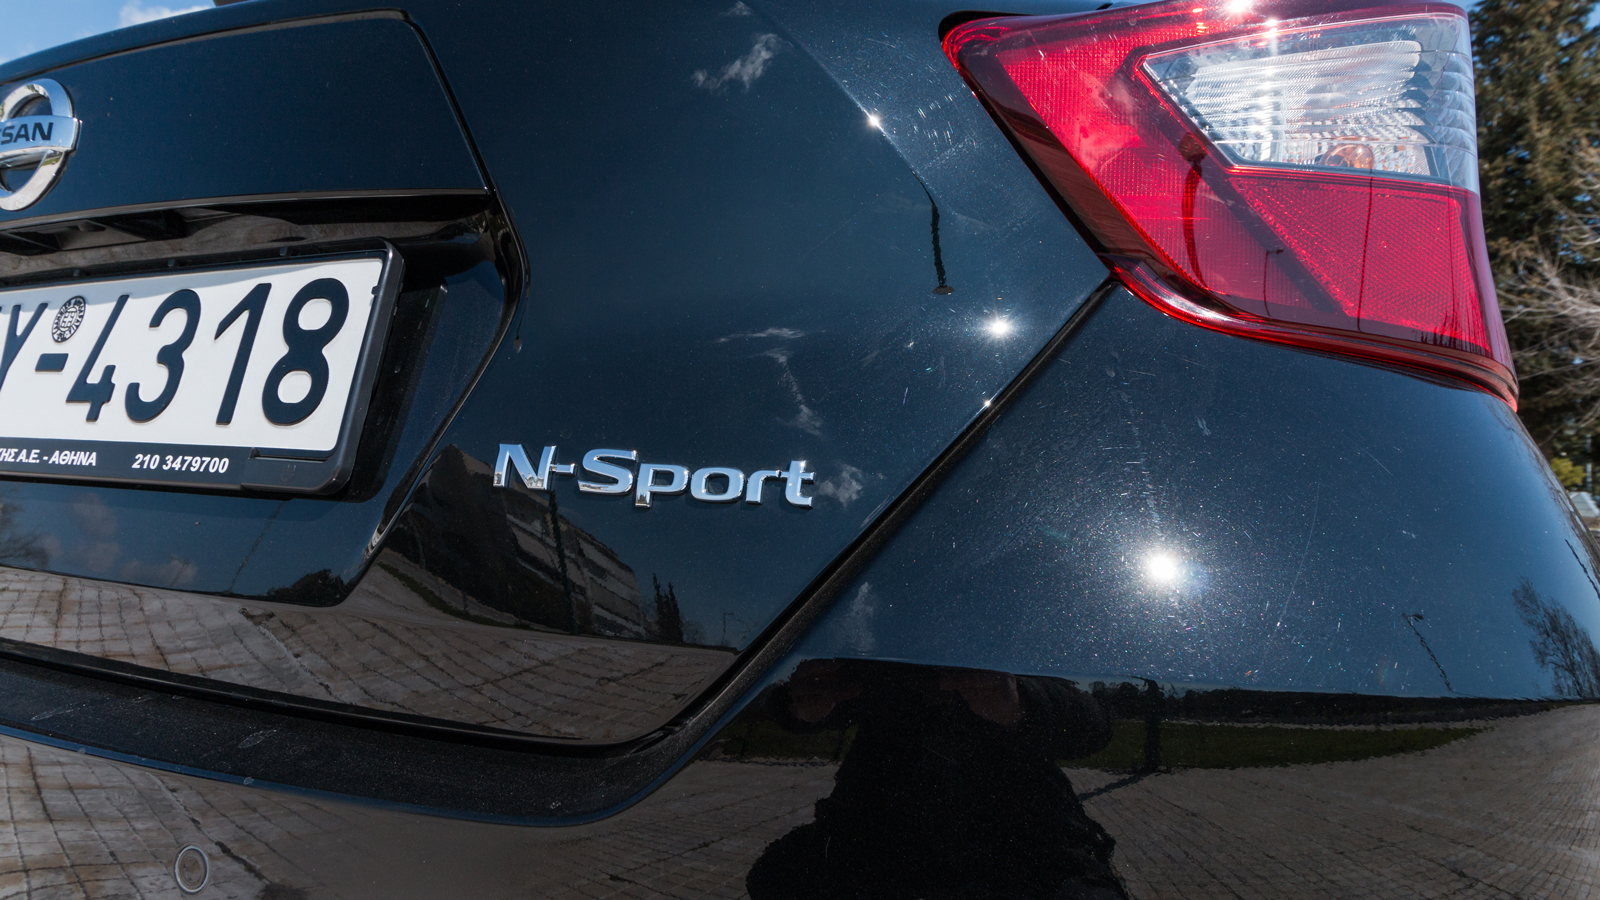 To σηματάκι ξεχωρίζει τη N-sport έκδοση από τις υπόλοιπες, με τις μαύρες λεπτομέρειες να μην ξεχωρίζουν λόγω του χρώματος του αμαξώματος